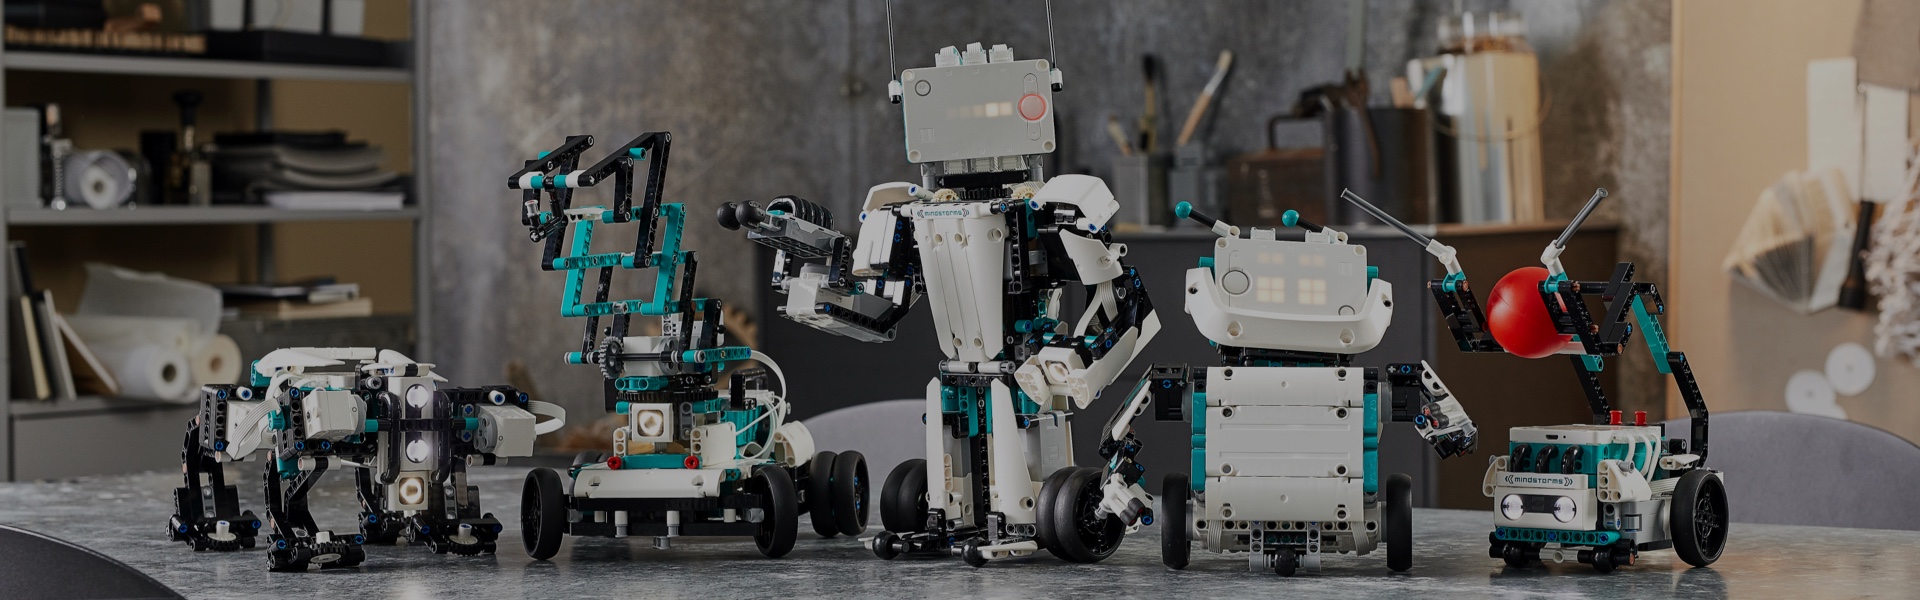 war robot lego sets